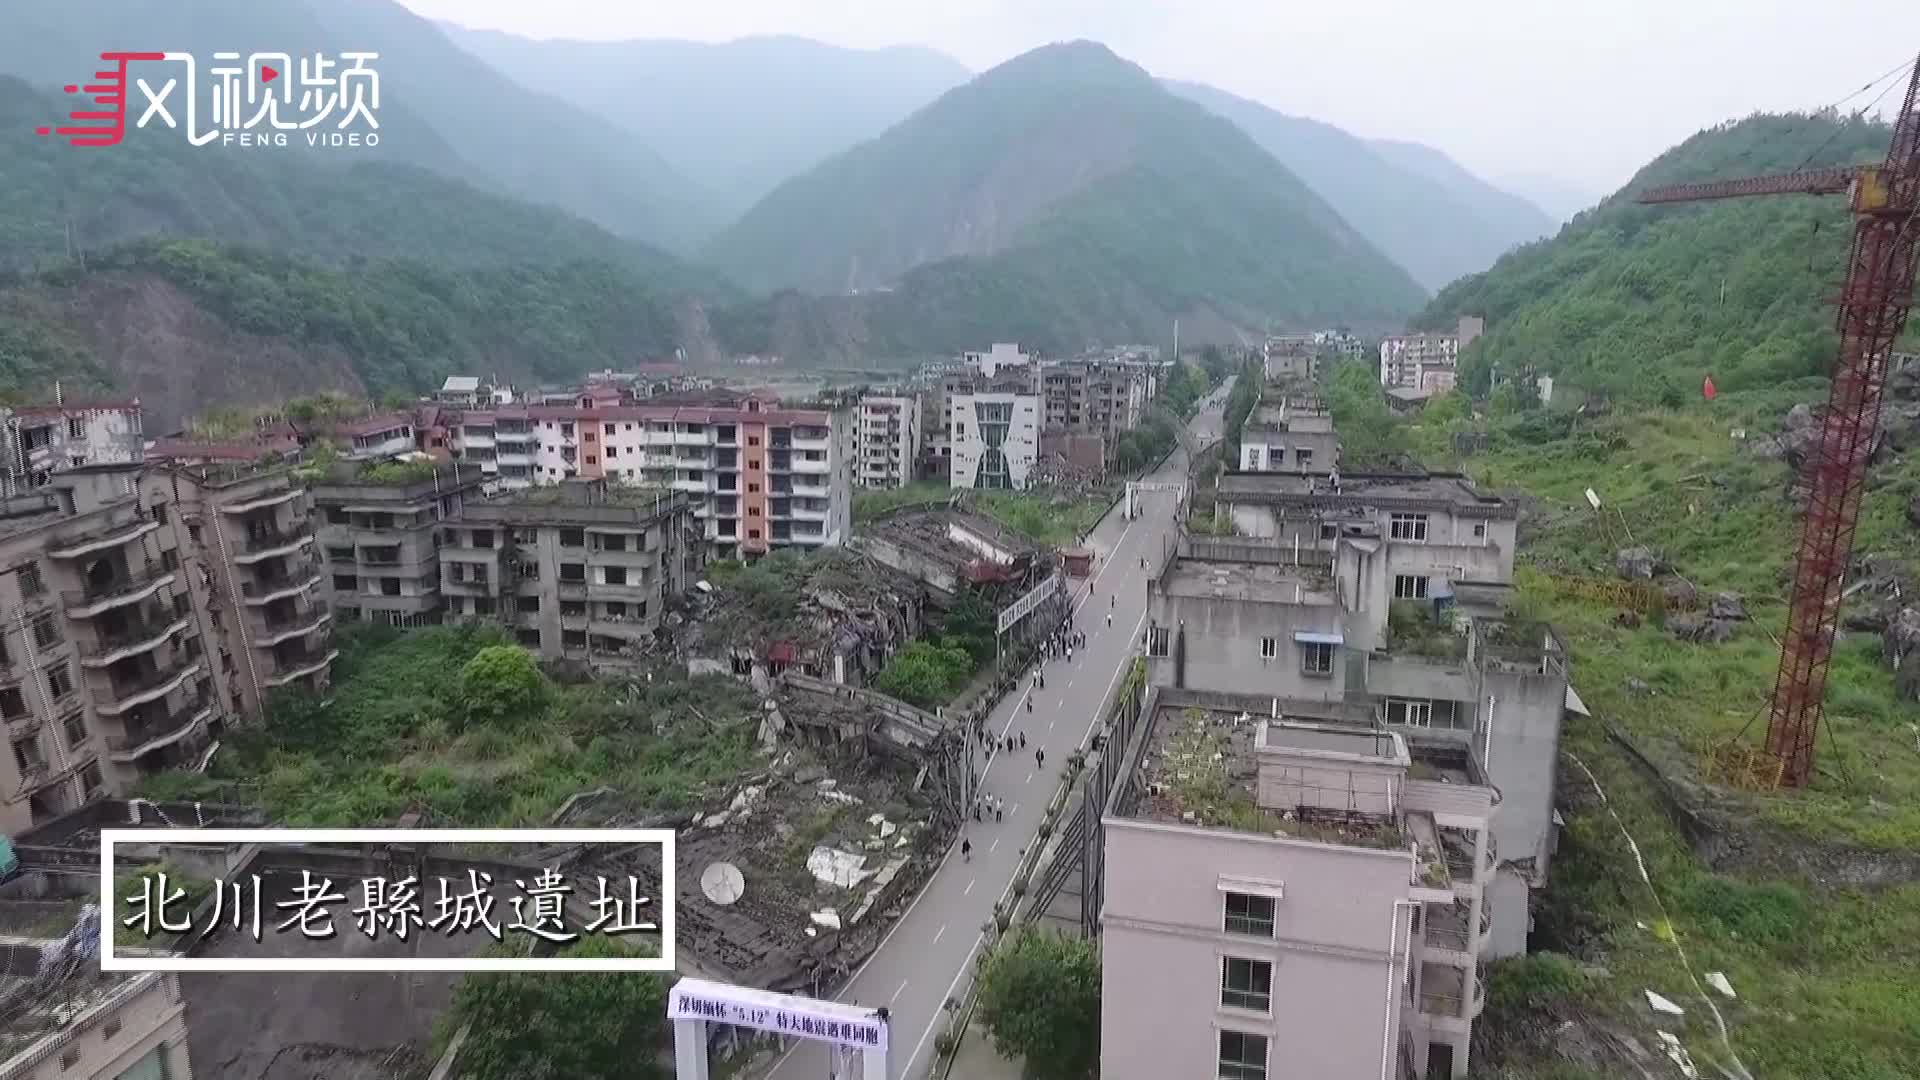 C视频|雨后羌山起云海 北川新县城入画来_四川在线